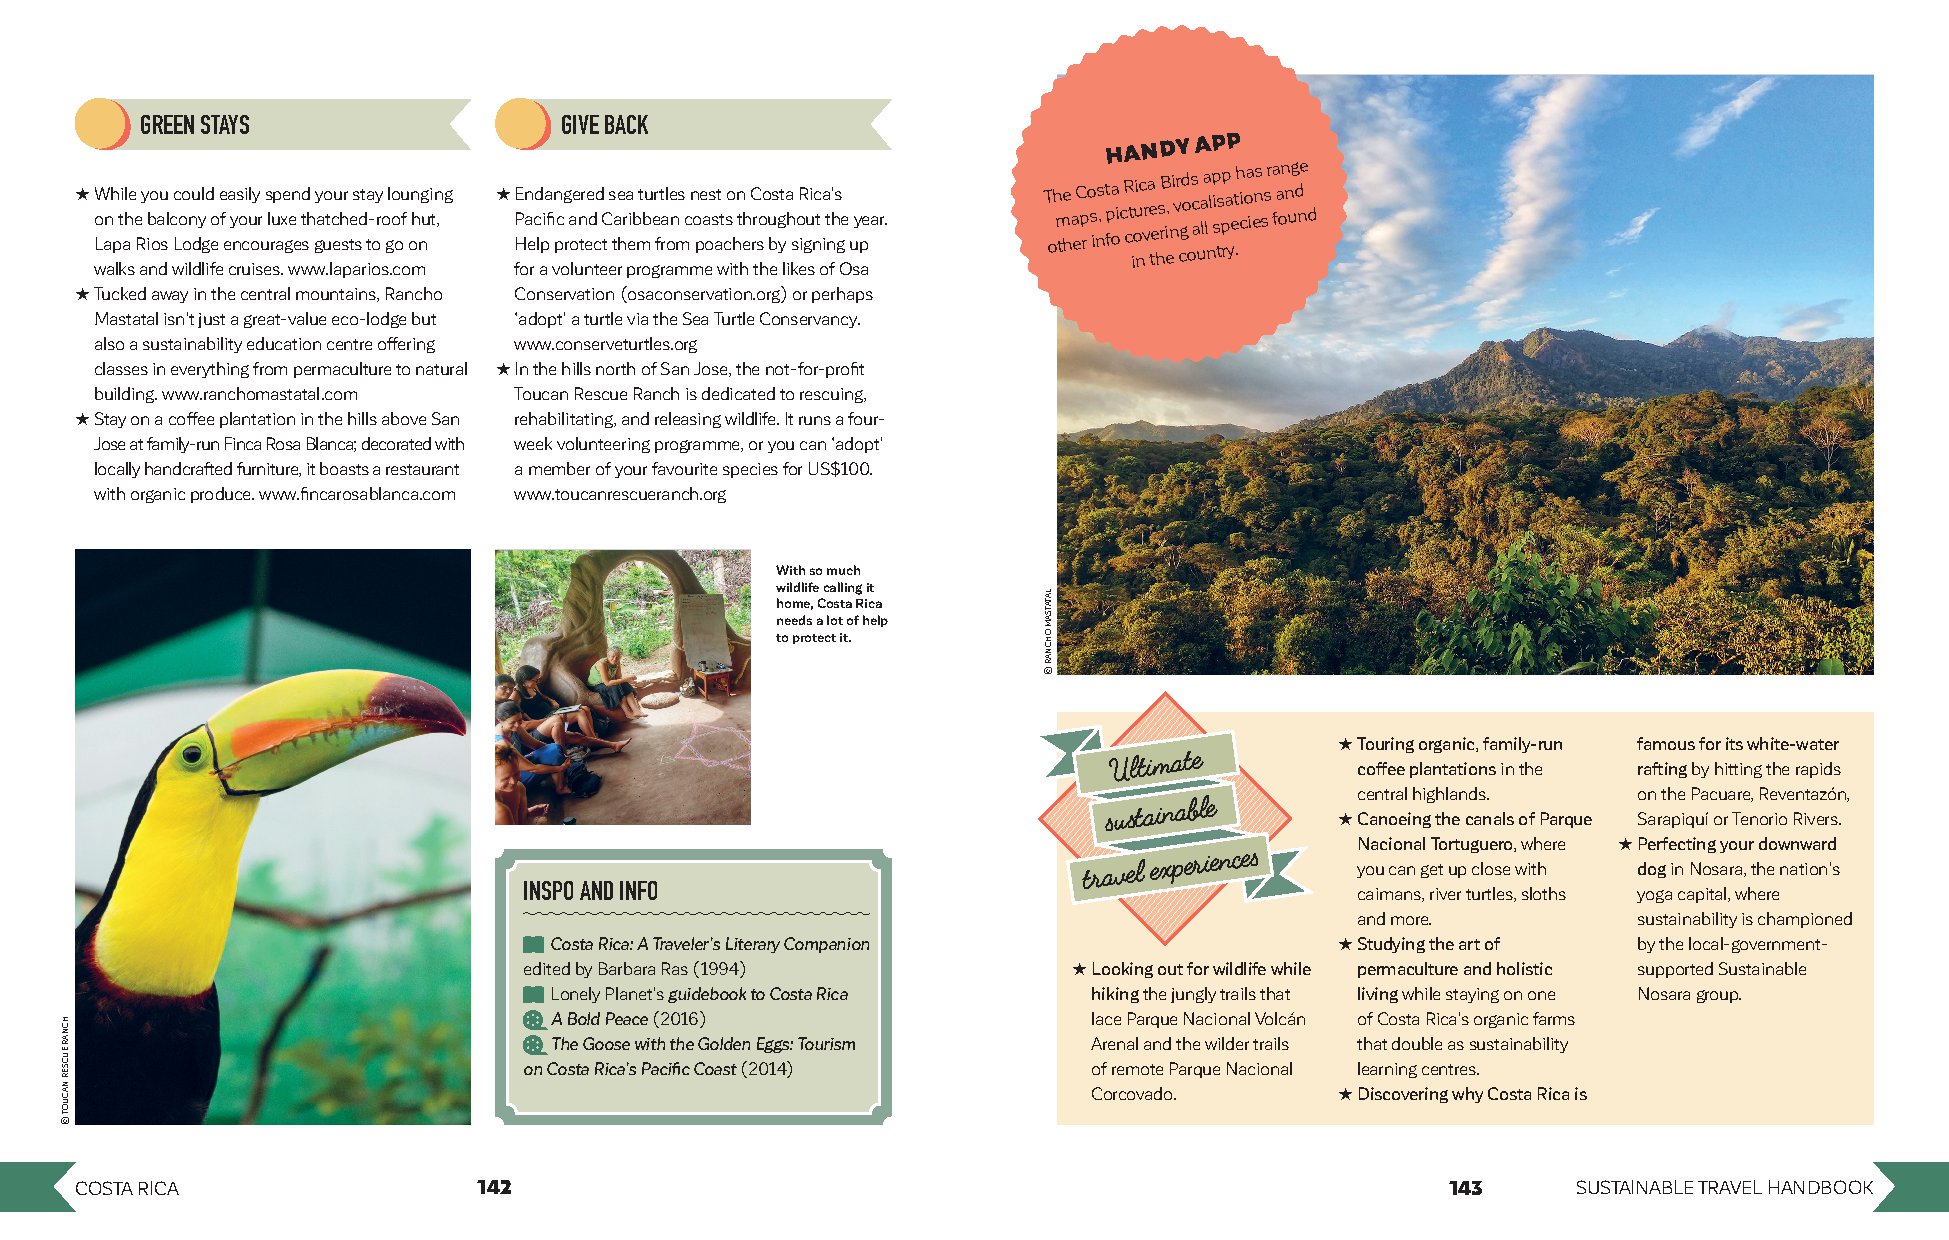 The Sustainable Travel Handbook 1